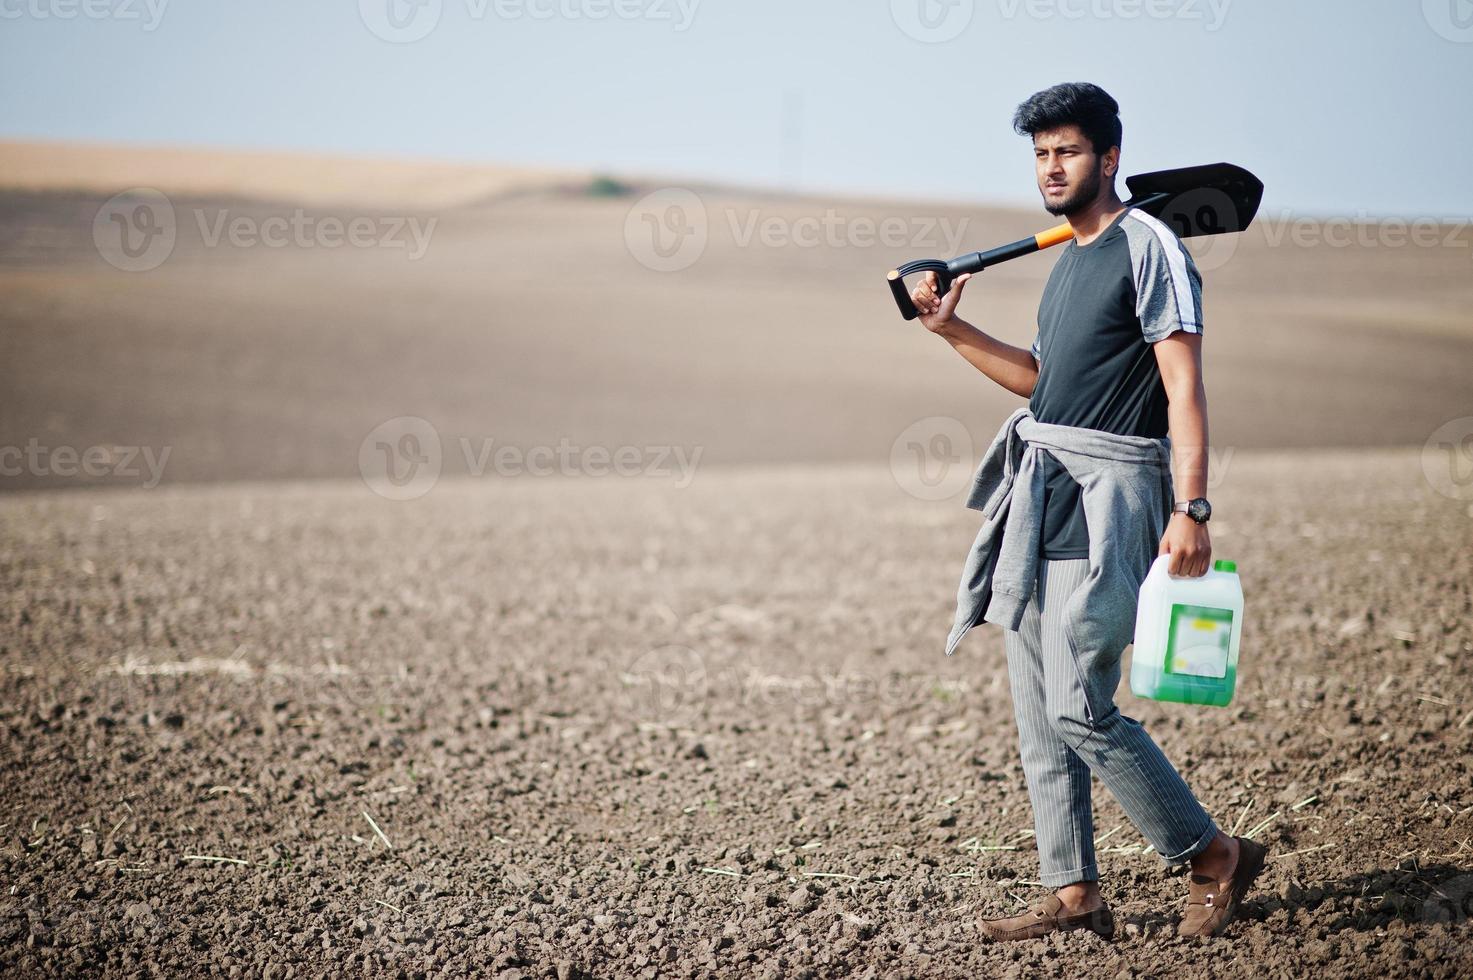 sydasiatisk agronombonde med spade som inspekterar svart jord. jordbruksproduktion koncept. foto